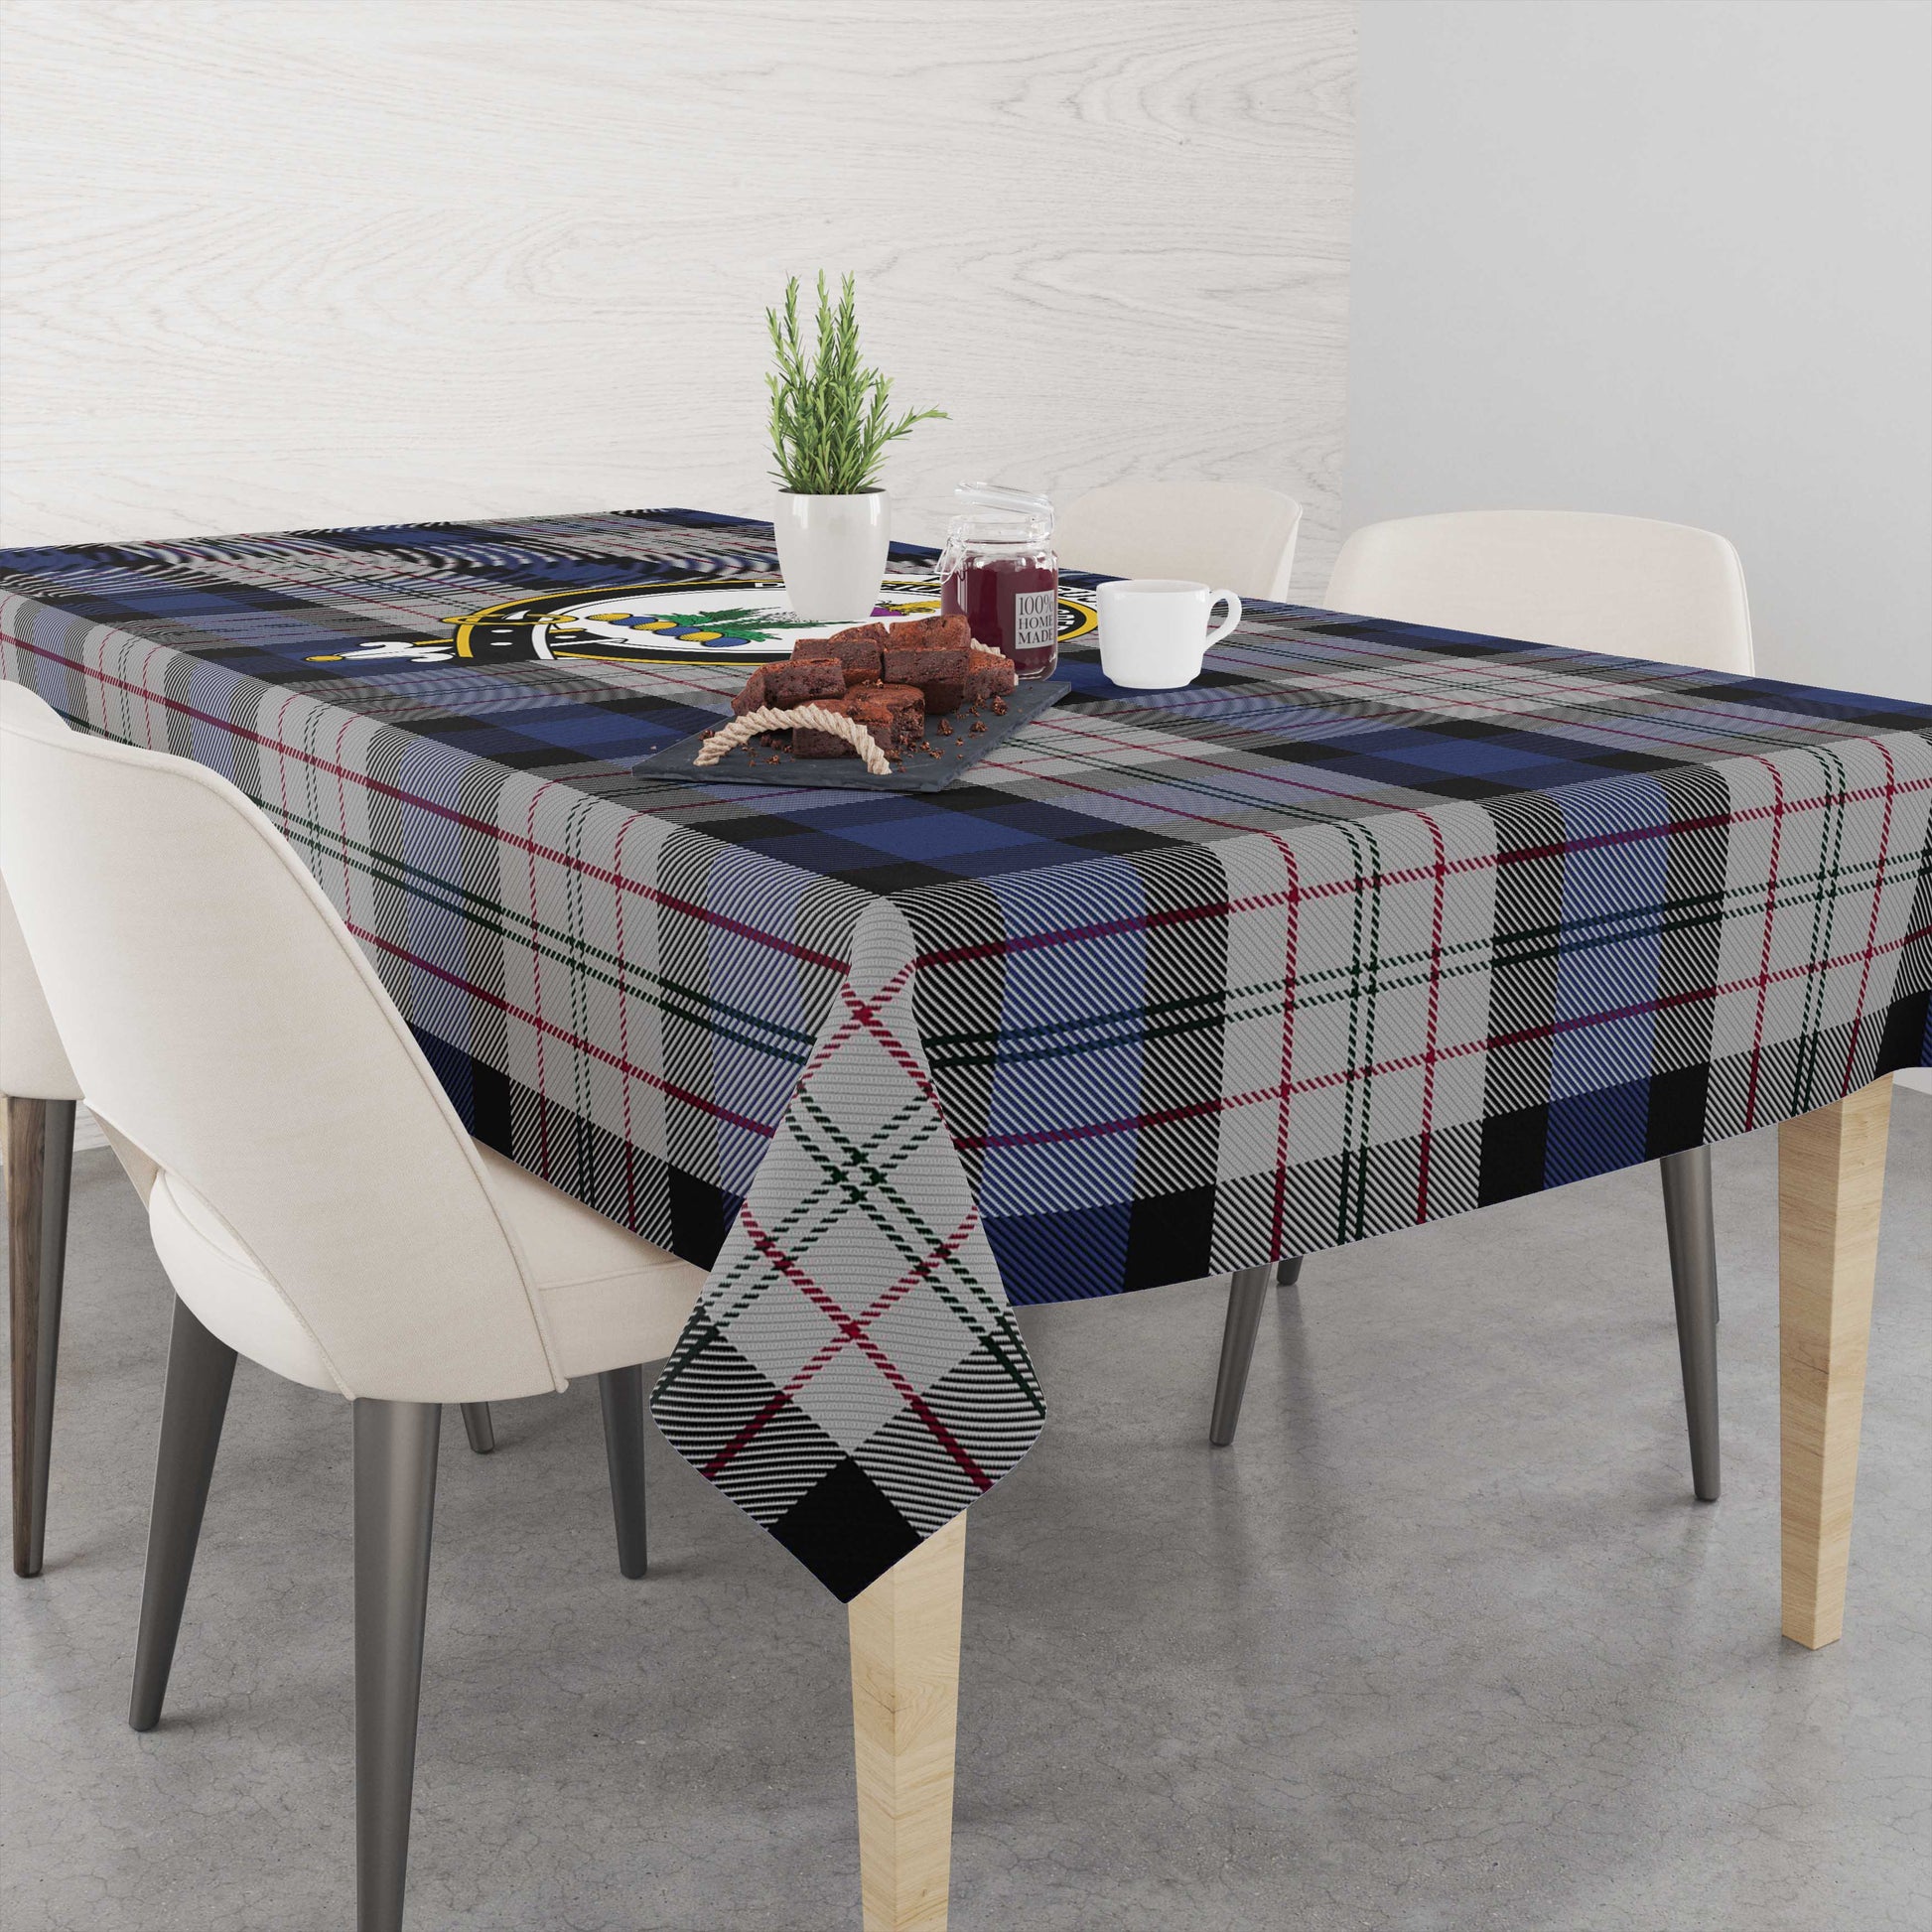 ferguson-dress-tatan-tablecloth-with-family-crest